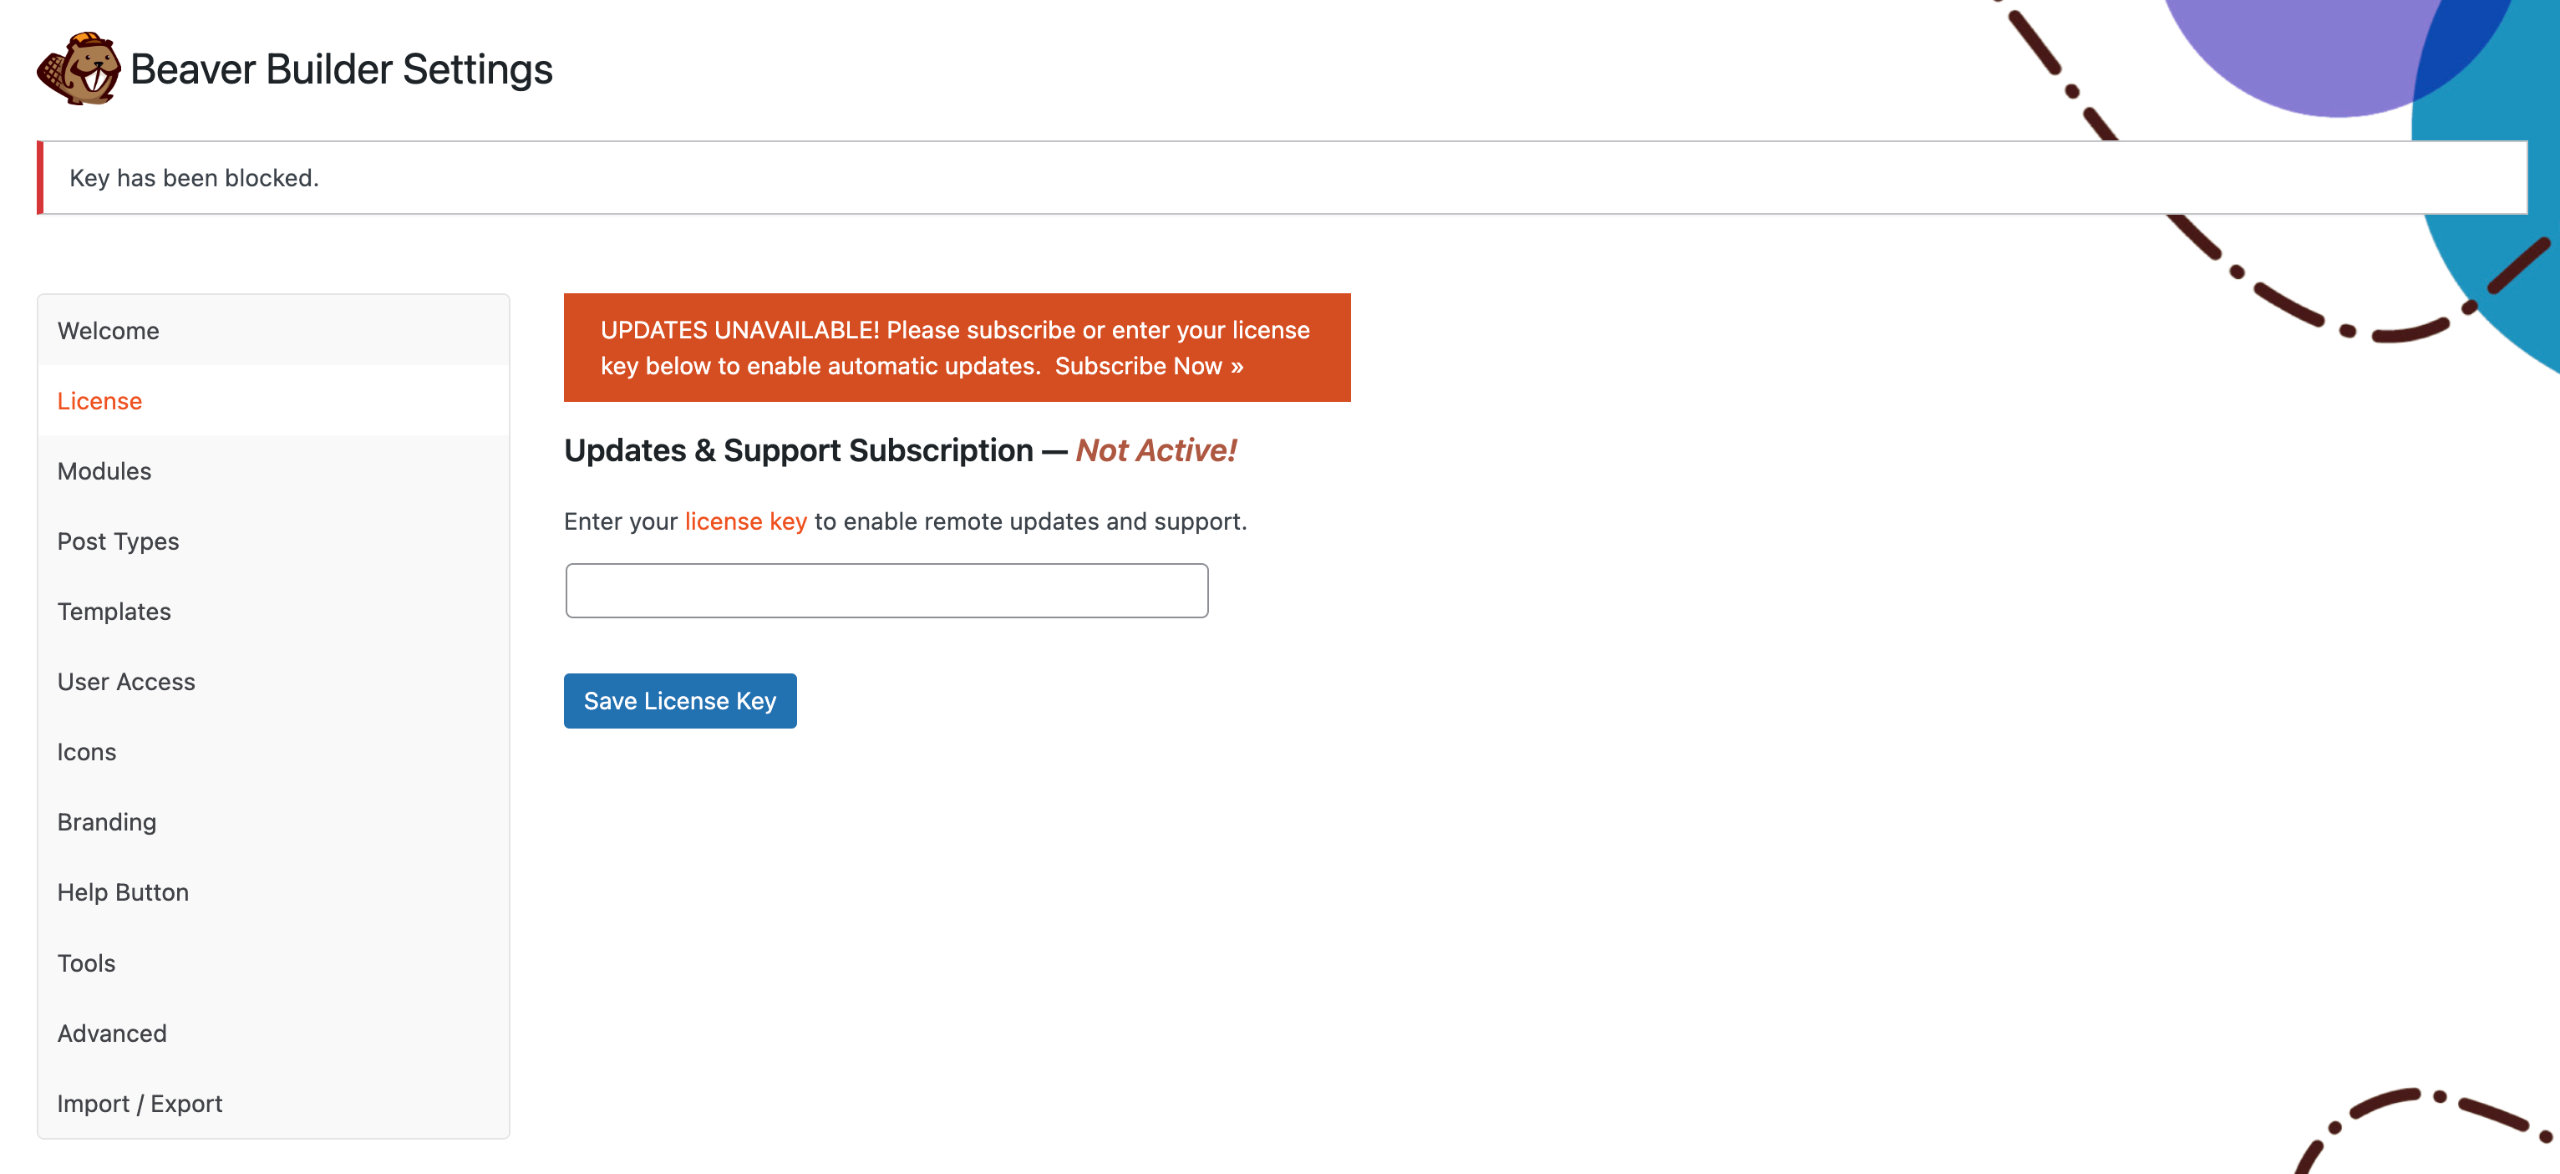 WordPress Admin Dashboard license key blocked message